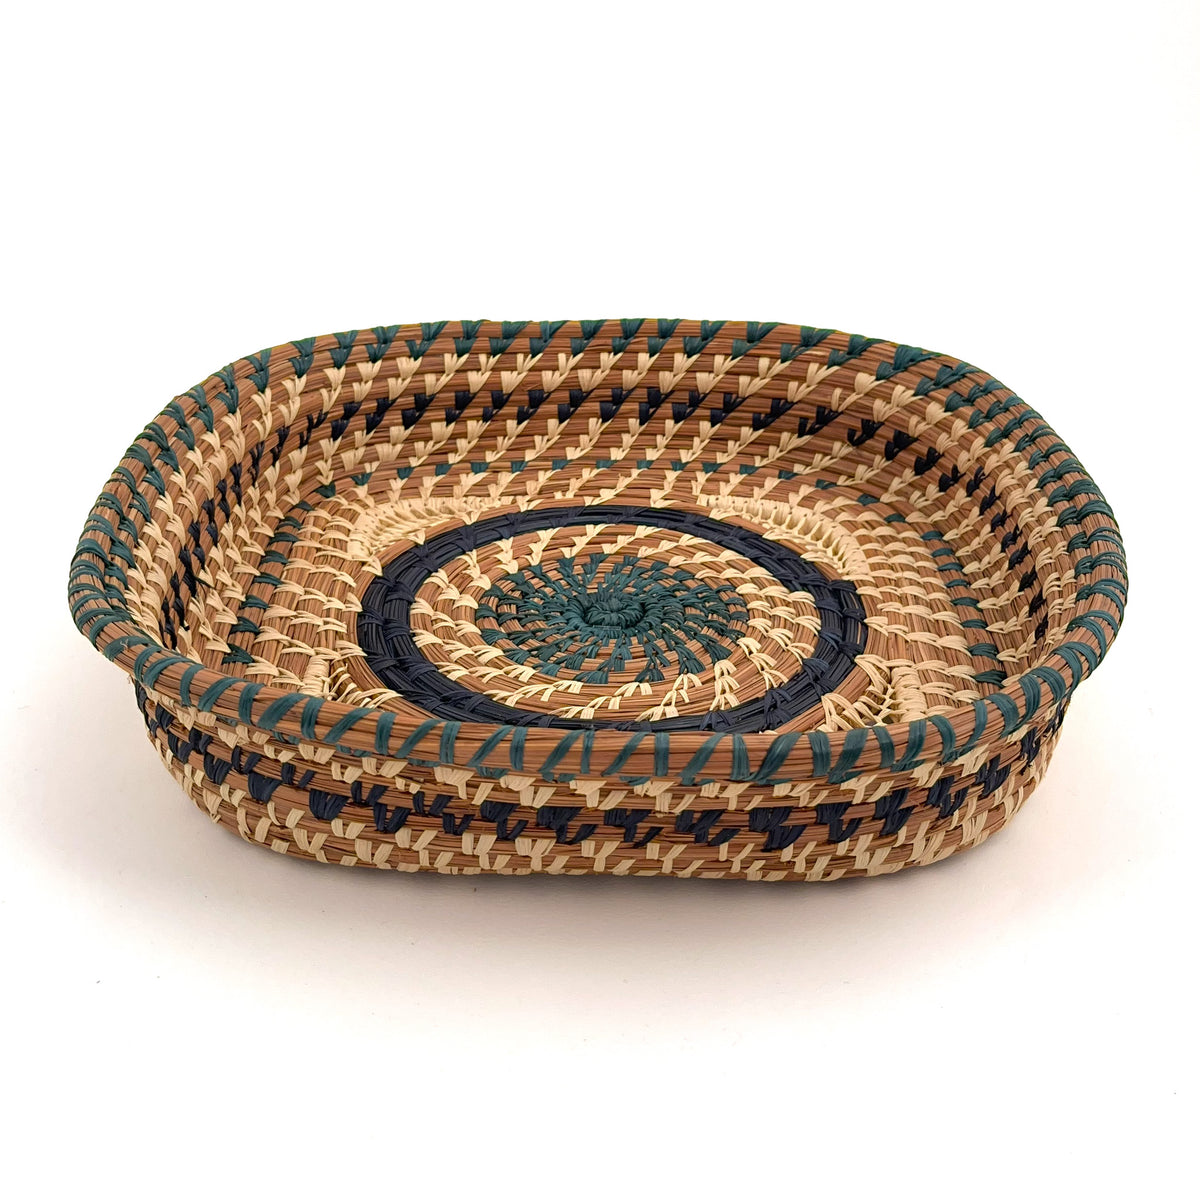 Pine needle basket with dyed raffia stitching